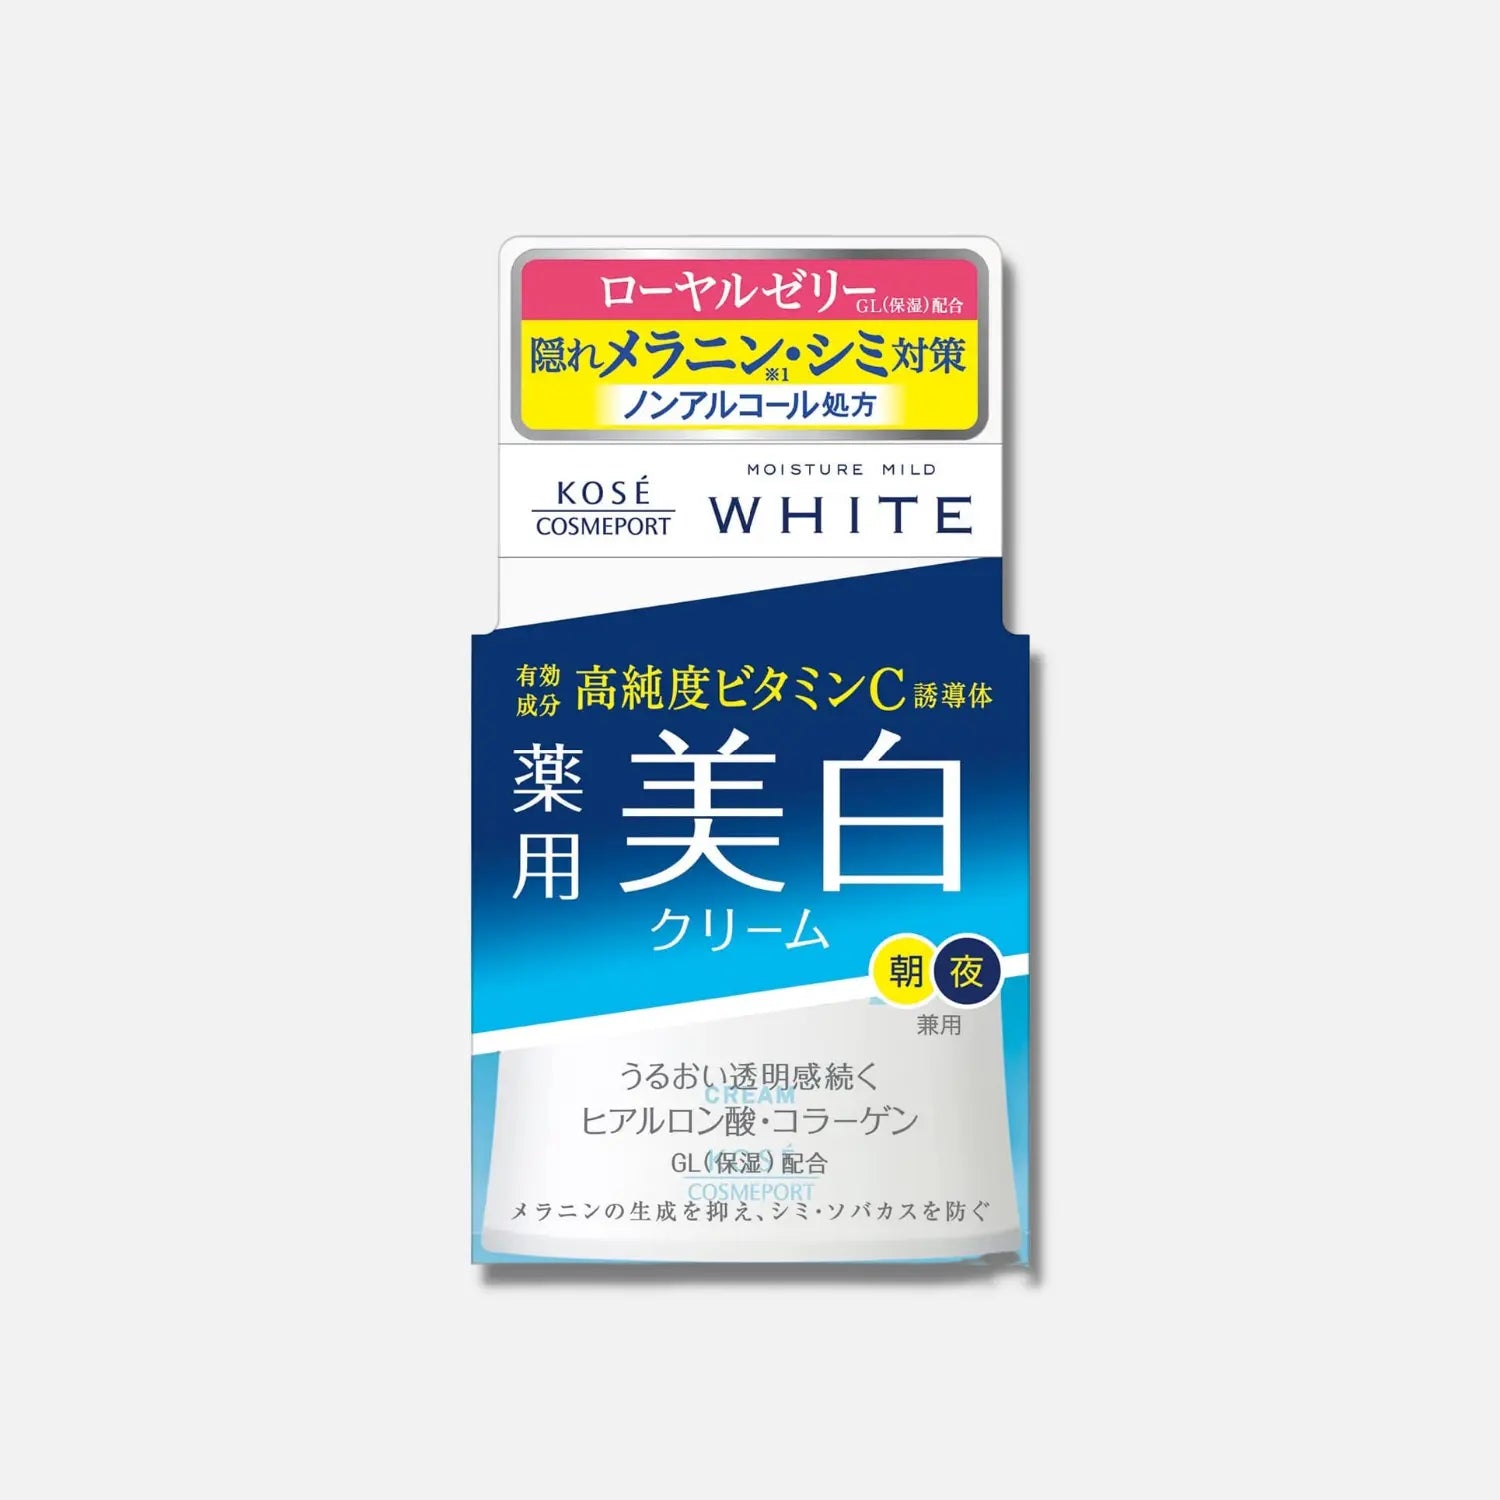 Kose White Moisture Mild Brightening Cream 55g - Buy Me Japan